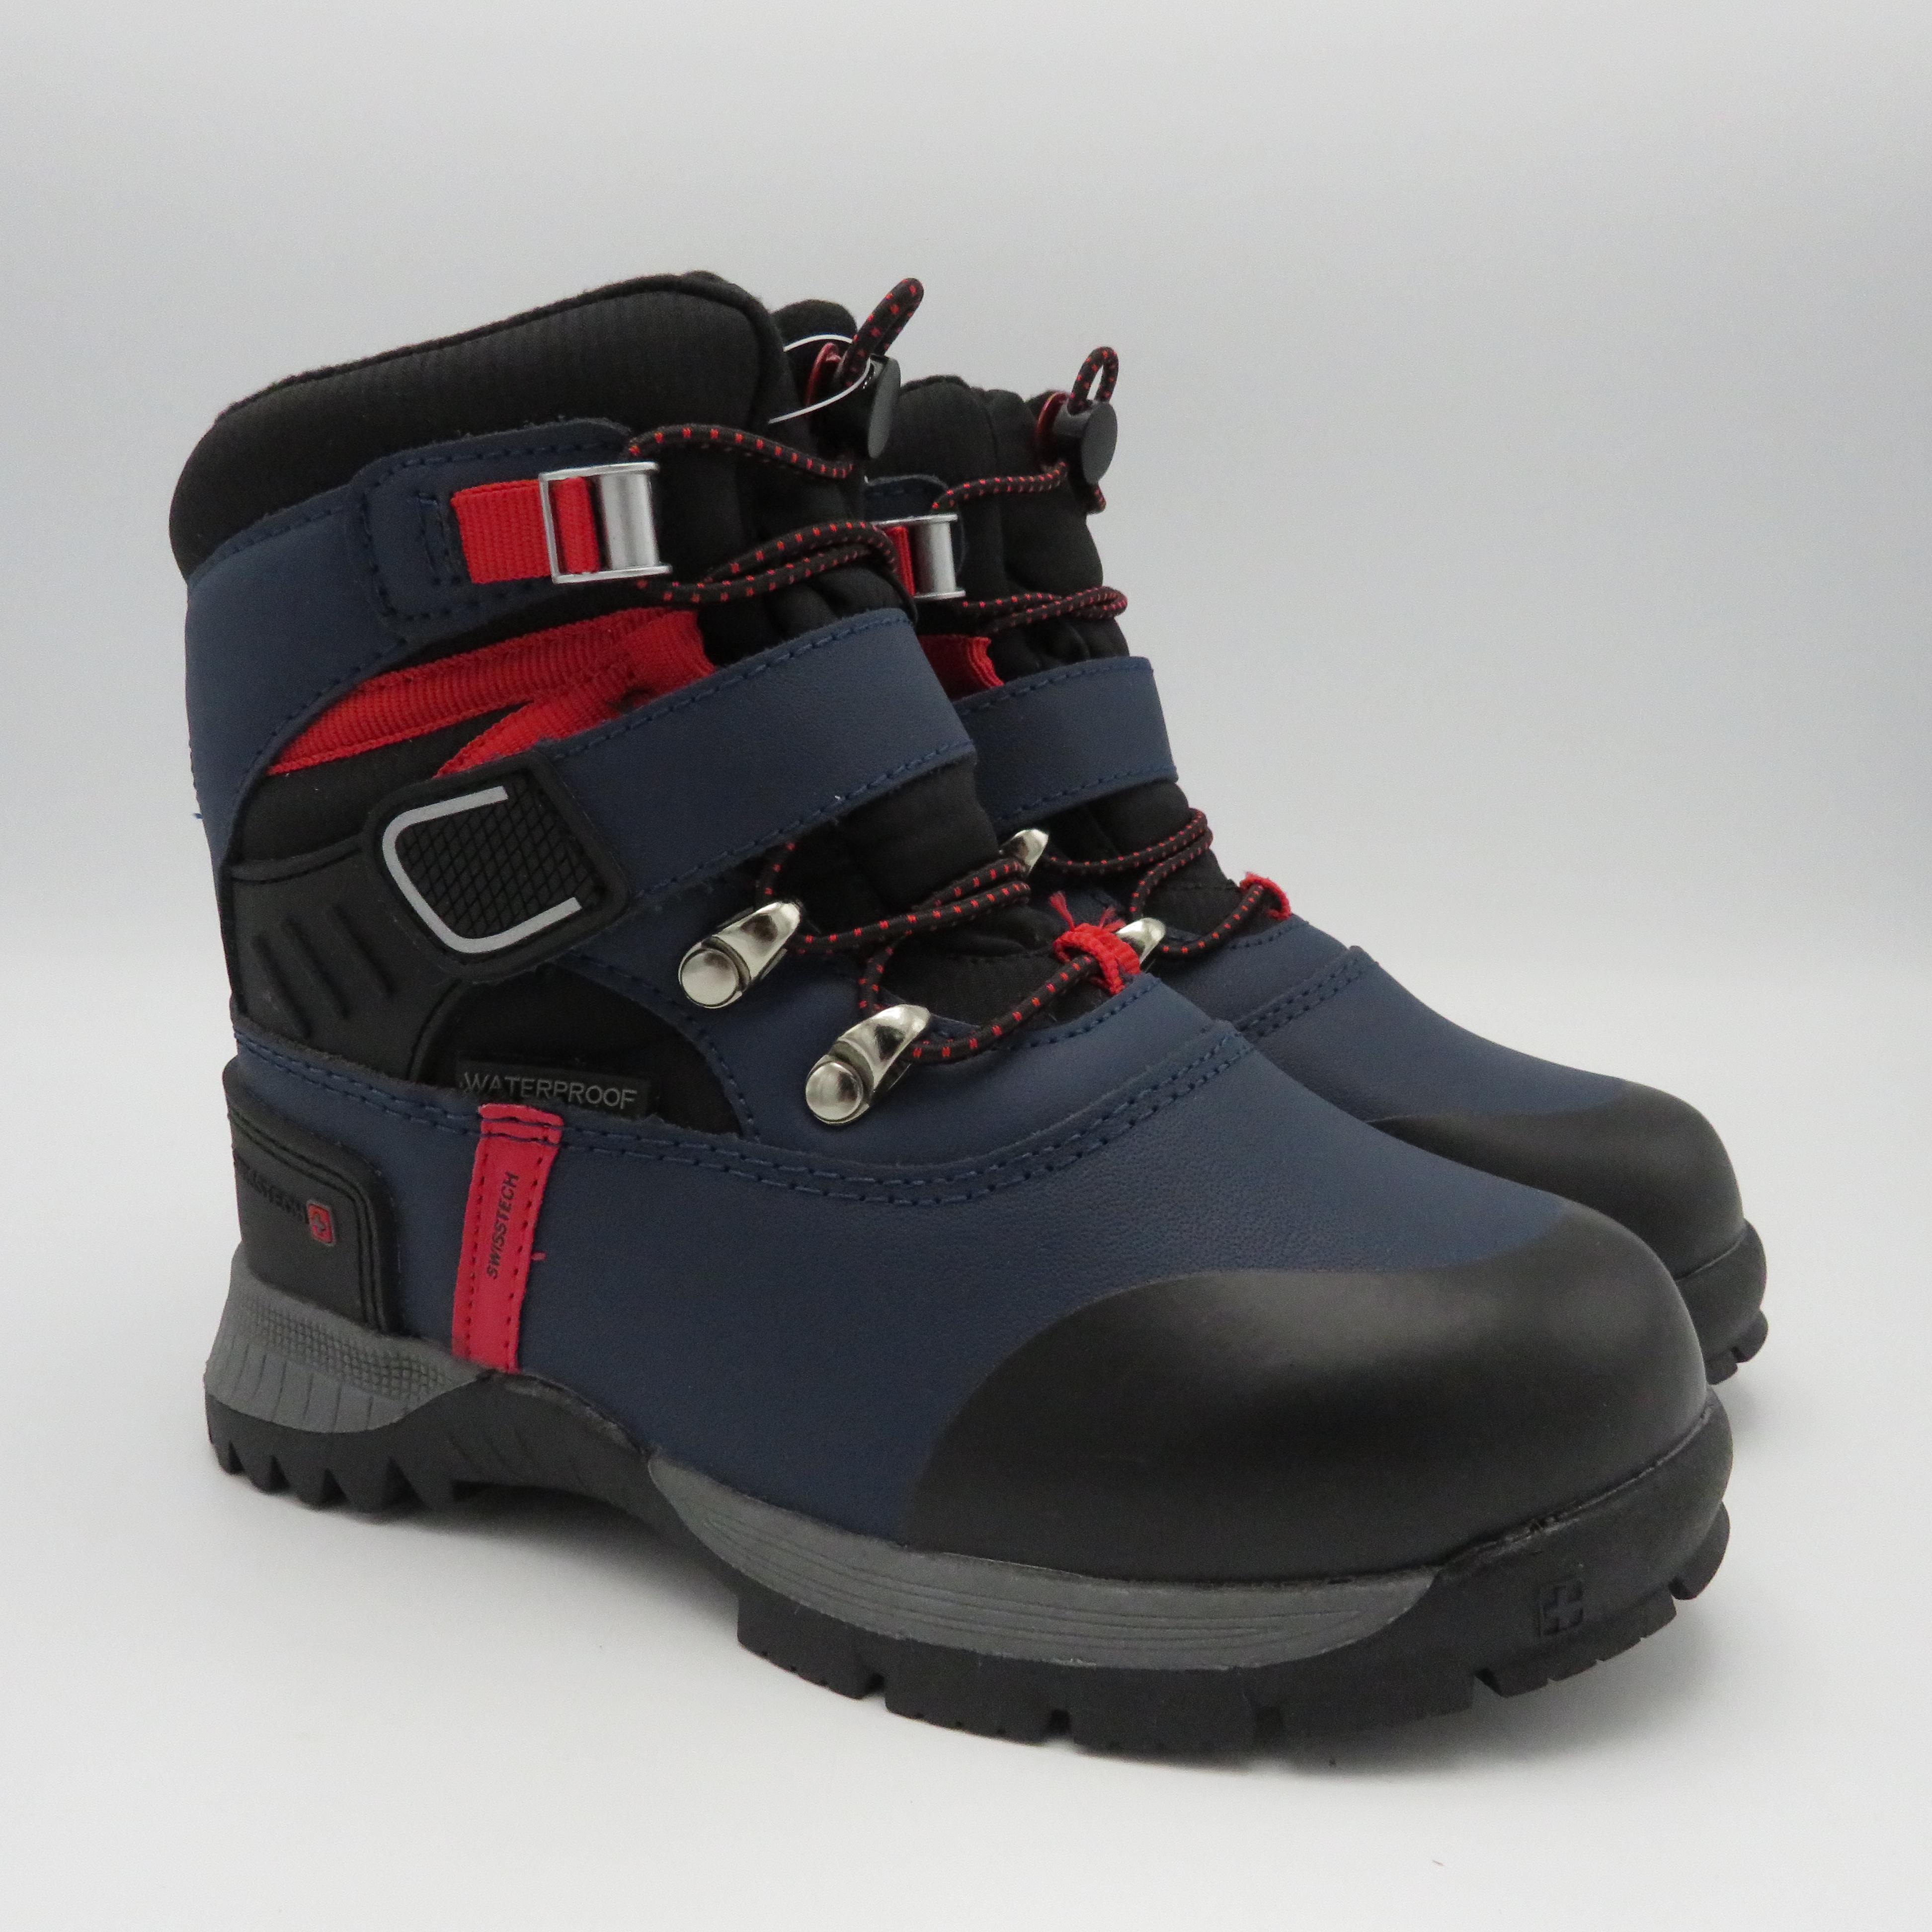 Swiss Tech Toddler Boys' Winter Boots, 3M Insulated, Waterproof -25*F ...